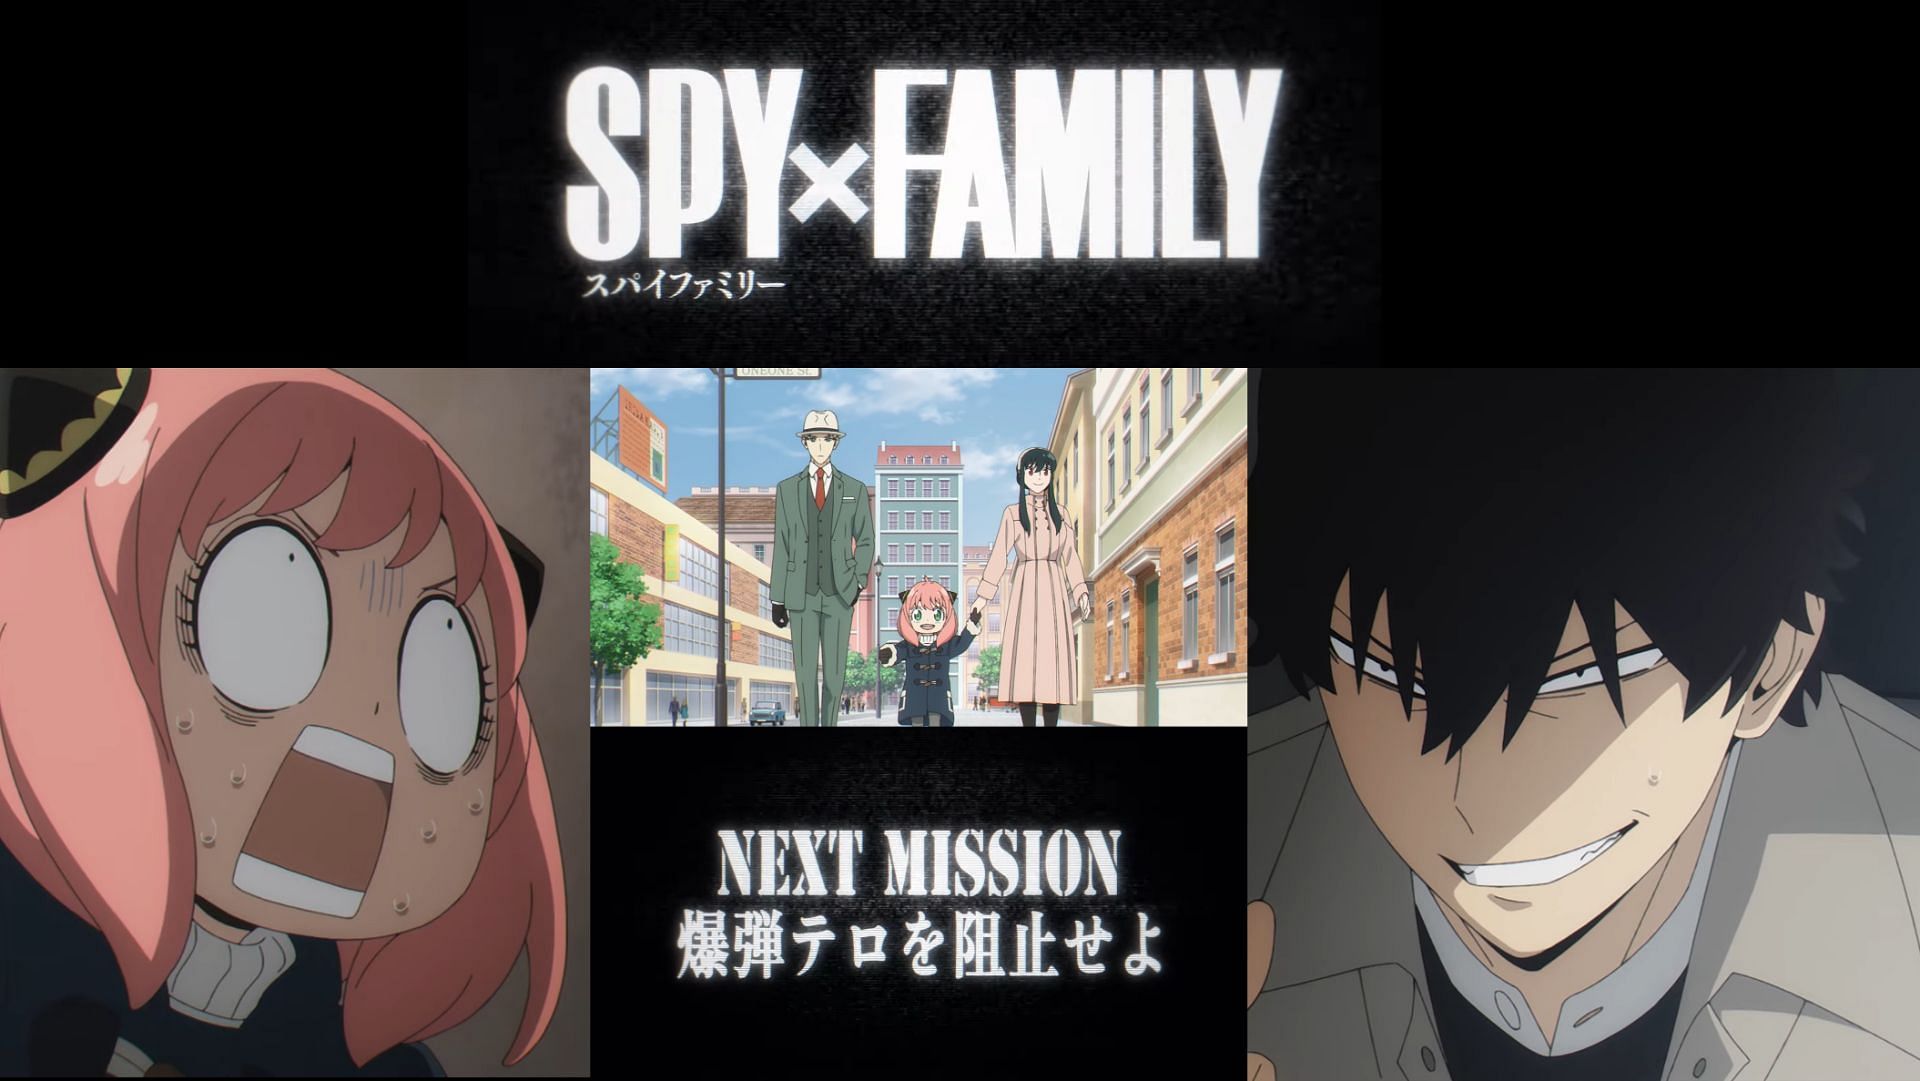 Spy x Family Part 2 Trailer Introduces an Unpredictable New Threat